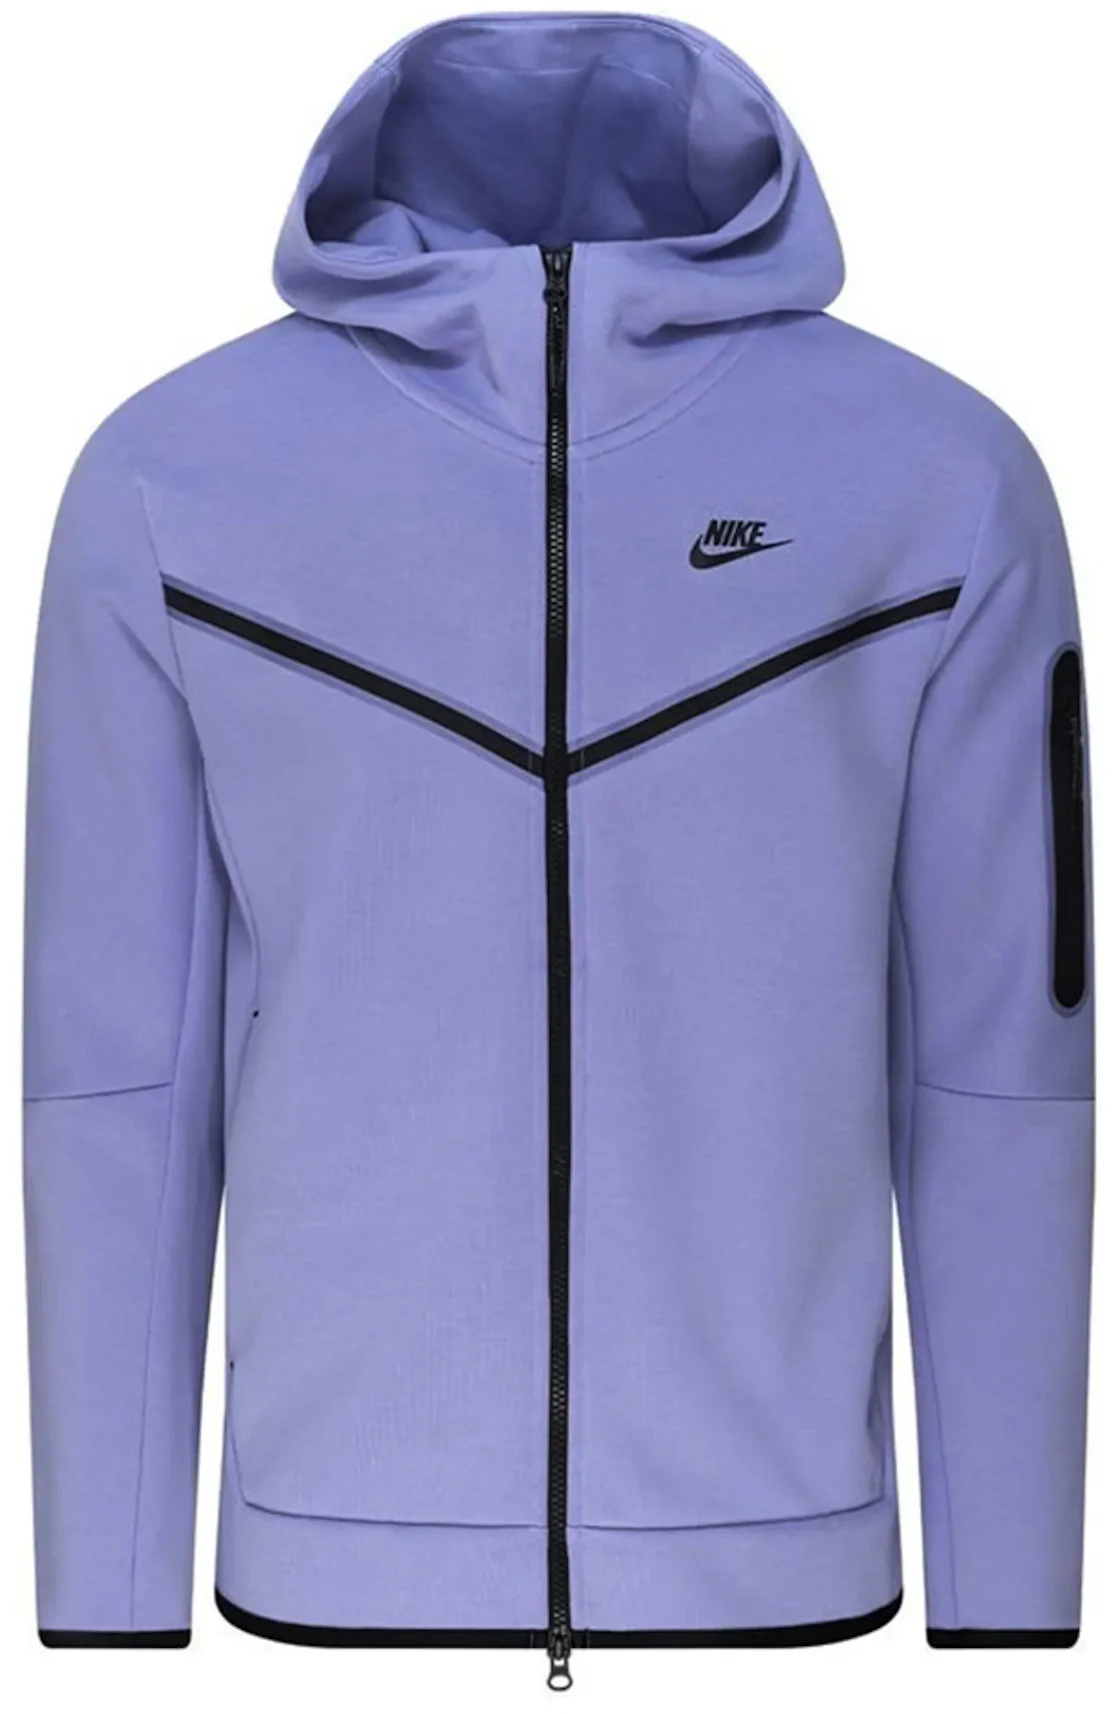 https://images.stockx.com/images/Nike-Sportswear-Tech-Fleece-Full-Zip-Sweatshirt-Light-Violet.jpg?fit=fill&bg=FFFFFF&w=1200&h=857&fm=webp&auto=compress&dpr=2&trim=color&updated_at=1701097236&q=60